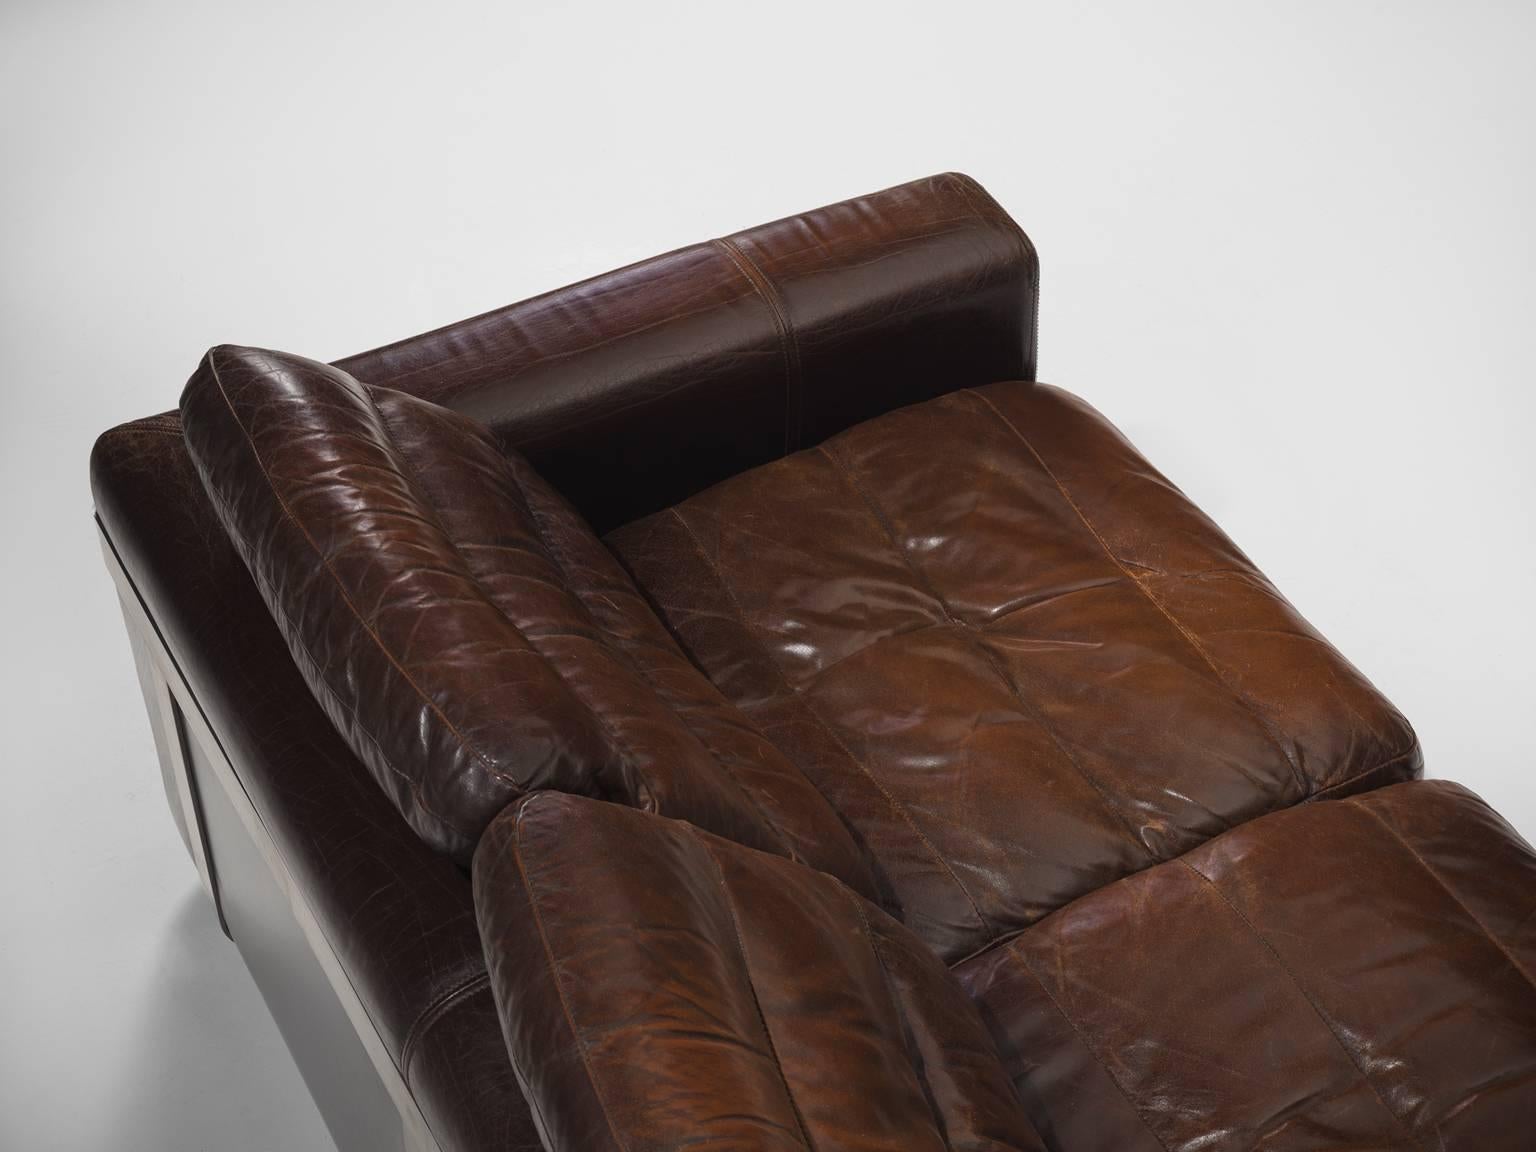 Post-Modern Roche Bobois Original Leather Sofa